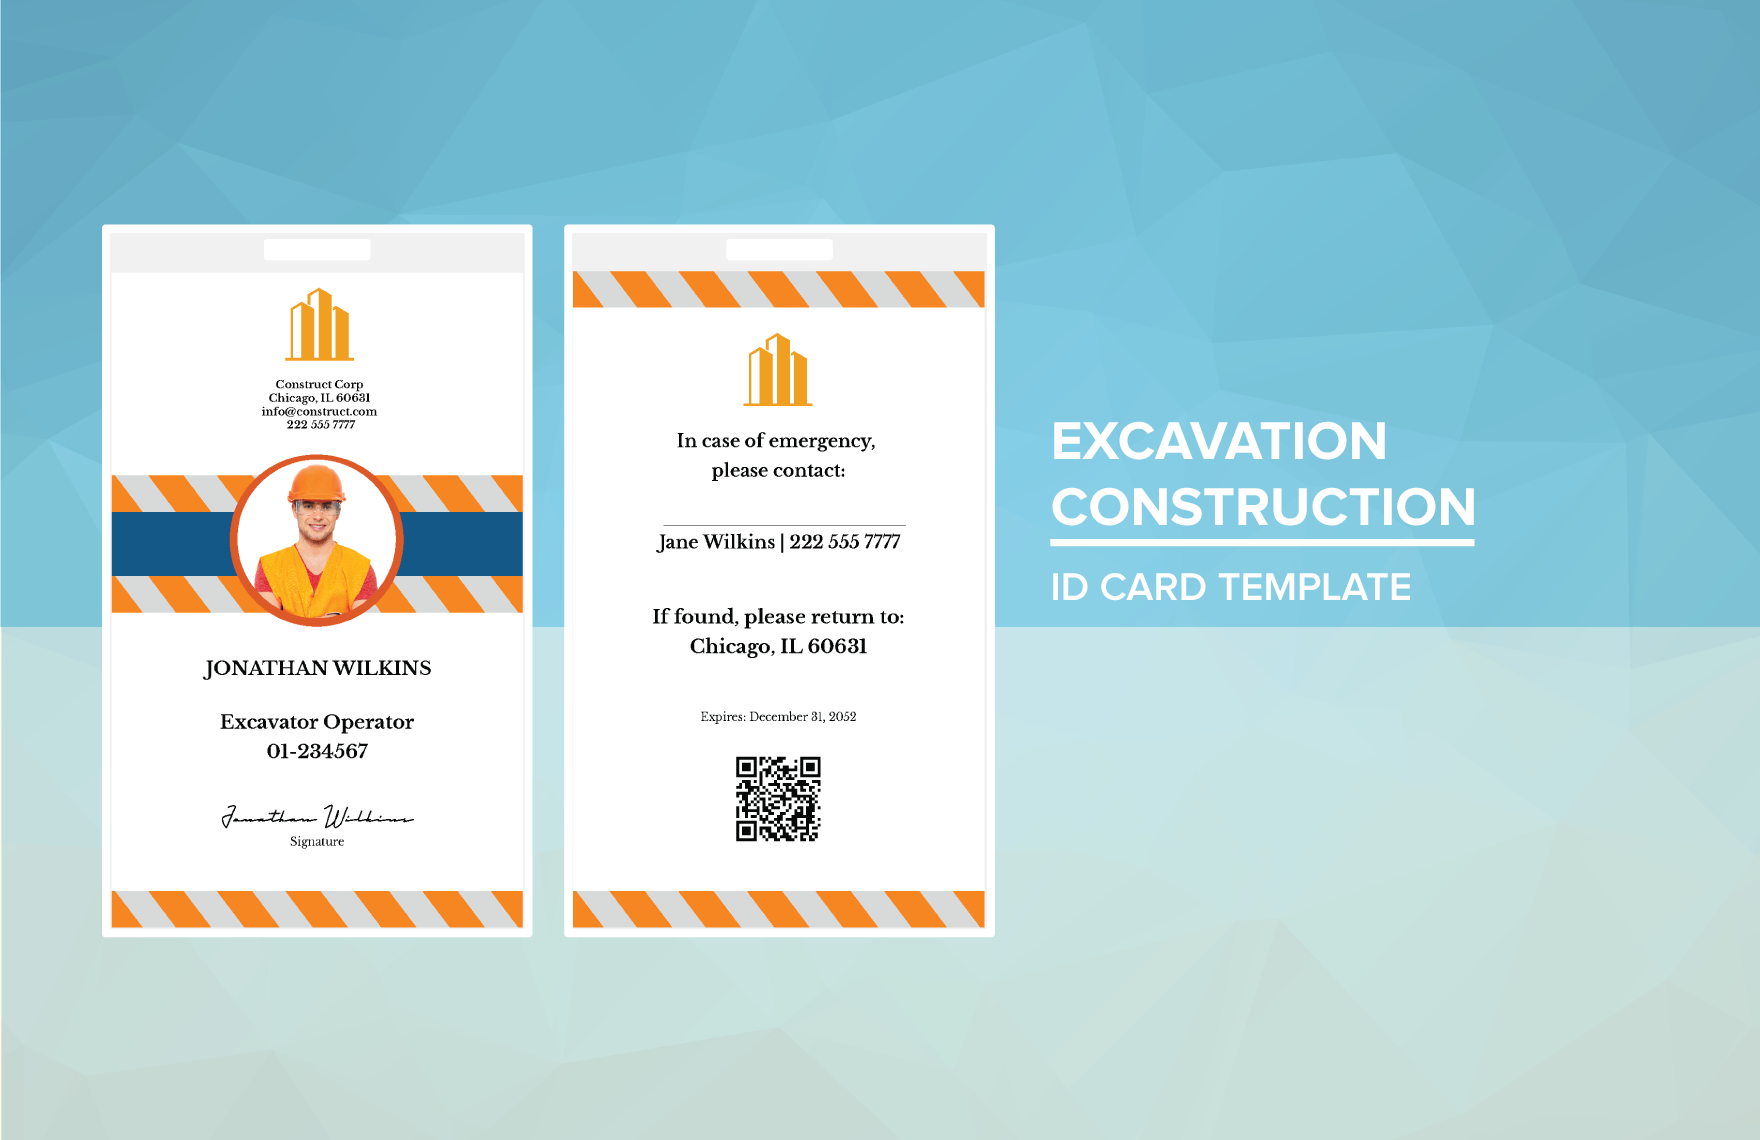 Excavation Construction ID Card